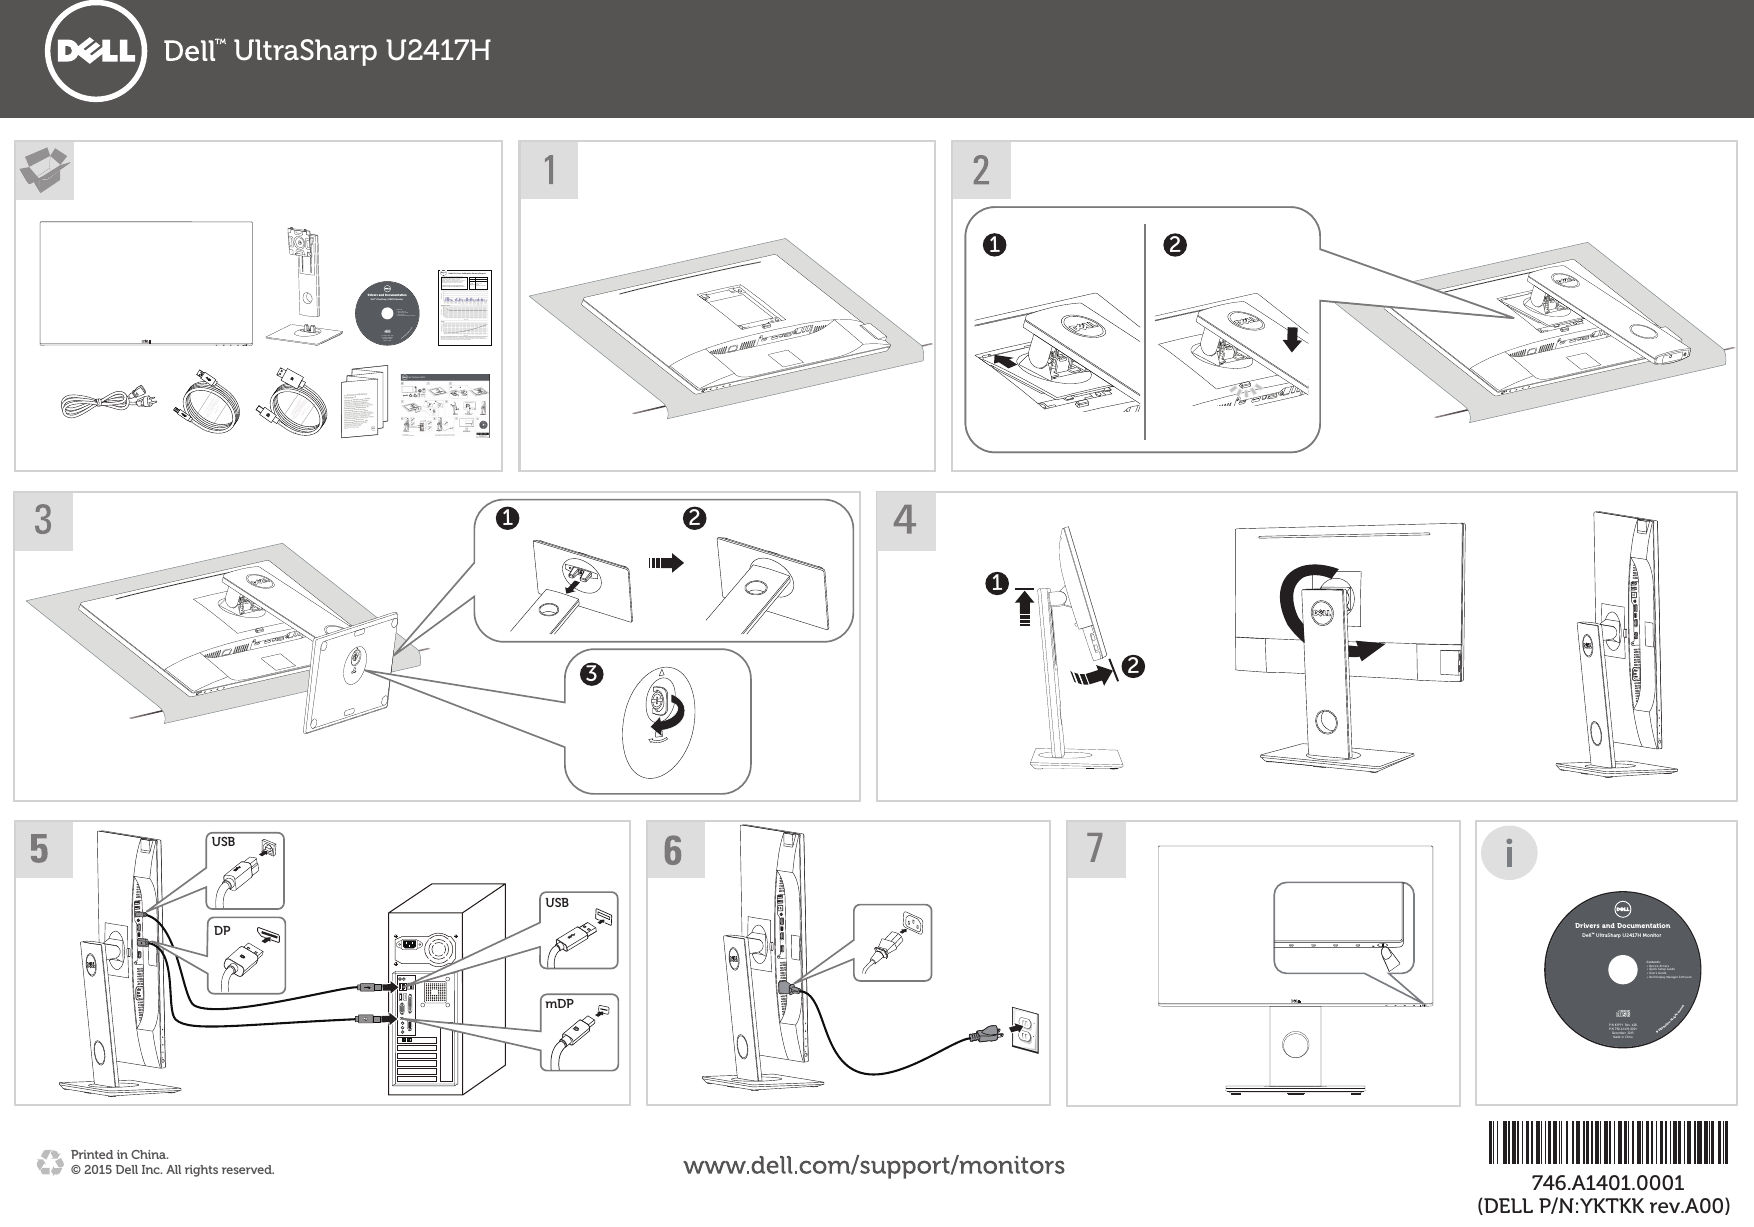 Dell u2417h monitor Quick Setup Guide User Manual En us